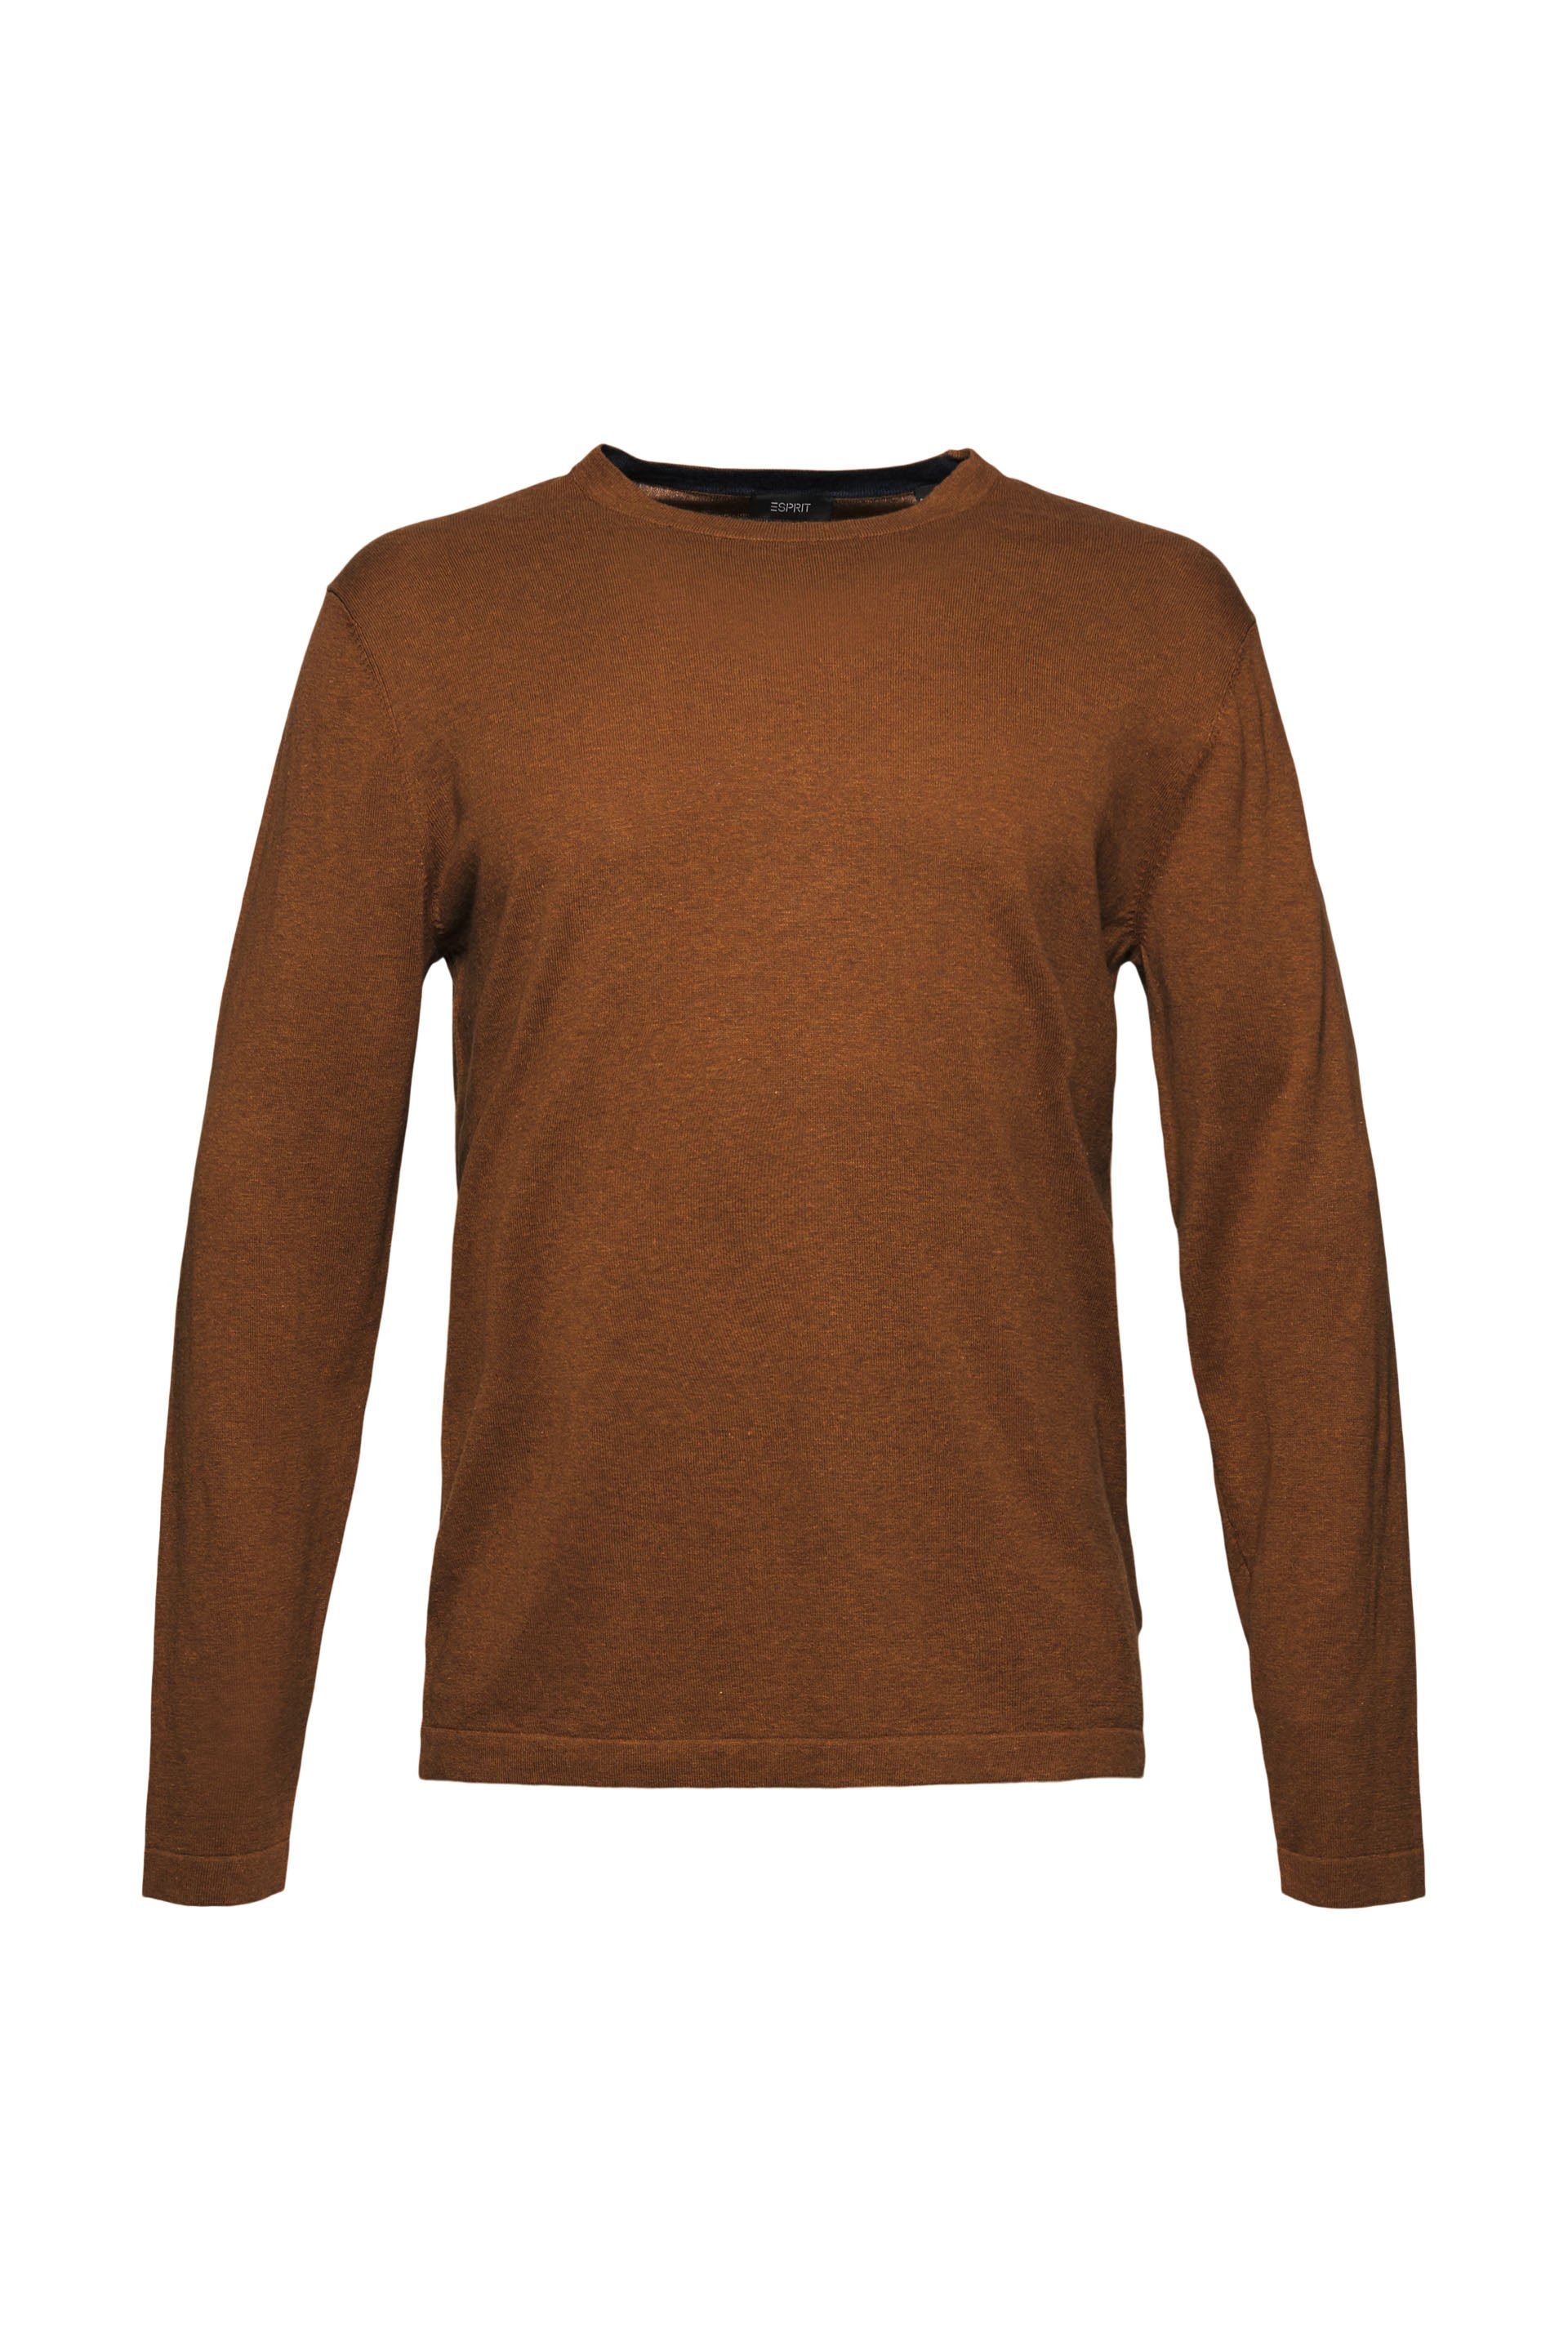 Esprit Sweatshirt CAMEL | Sweatshirts